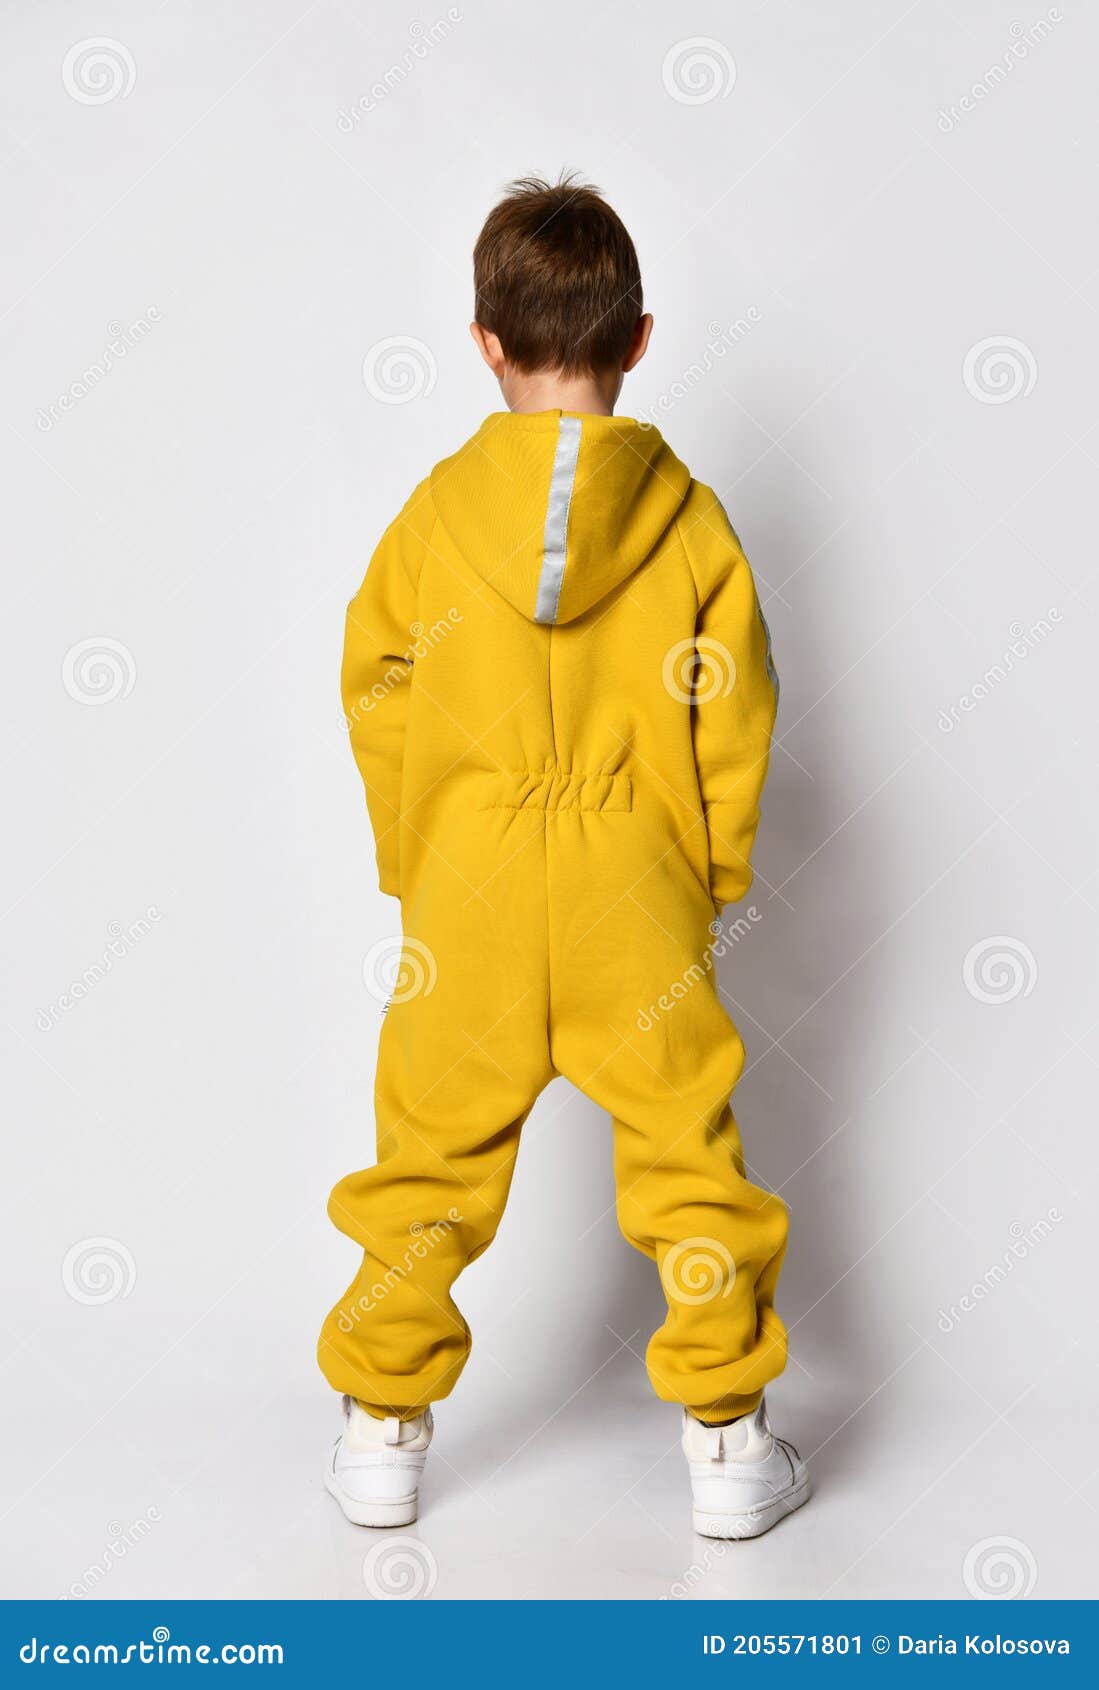 Boy Wearing Yellow Jumpsuit Back View Studio Shot Stock Image - Image ...